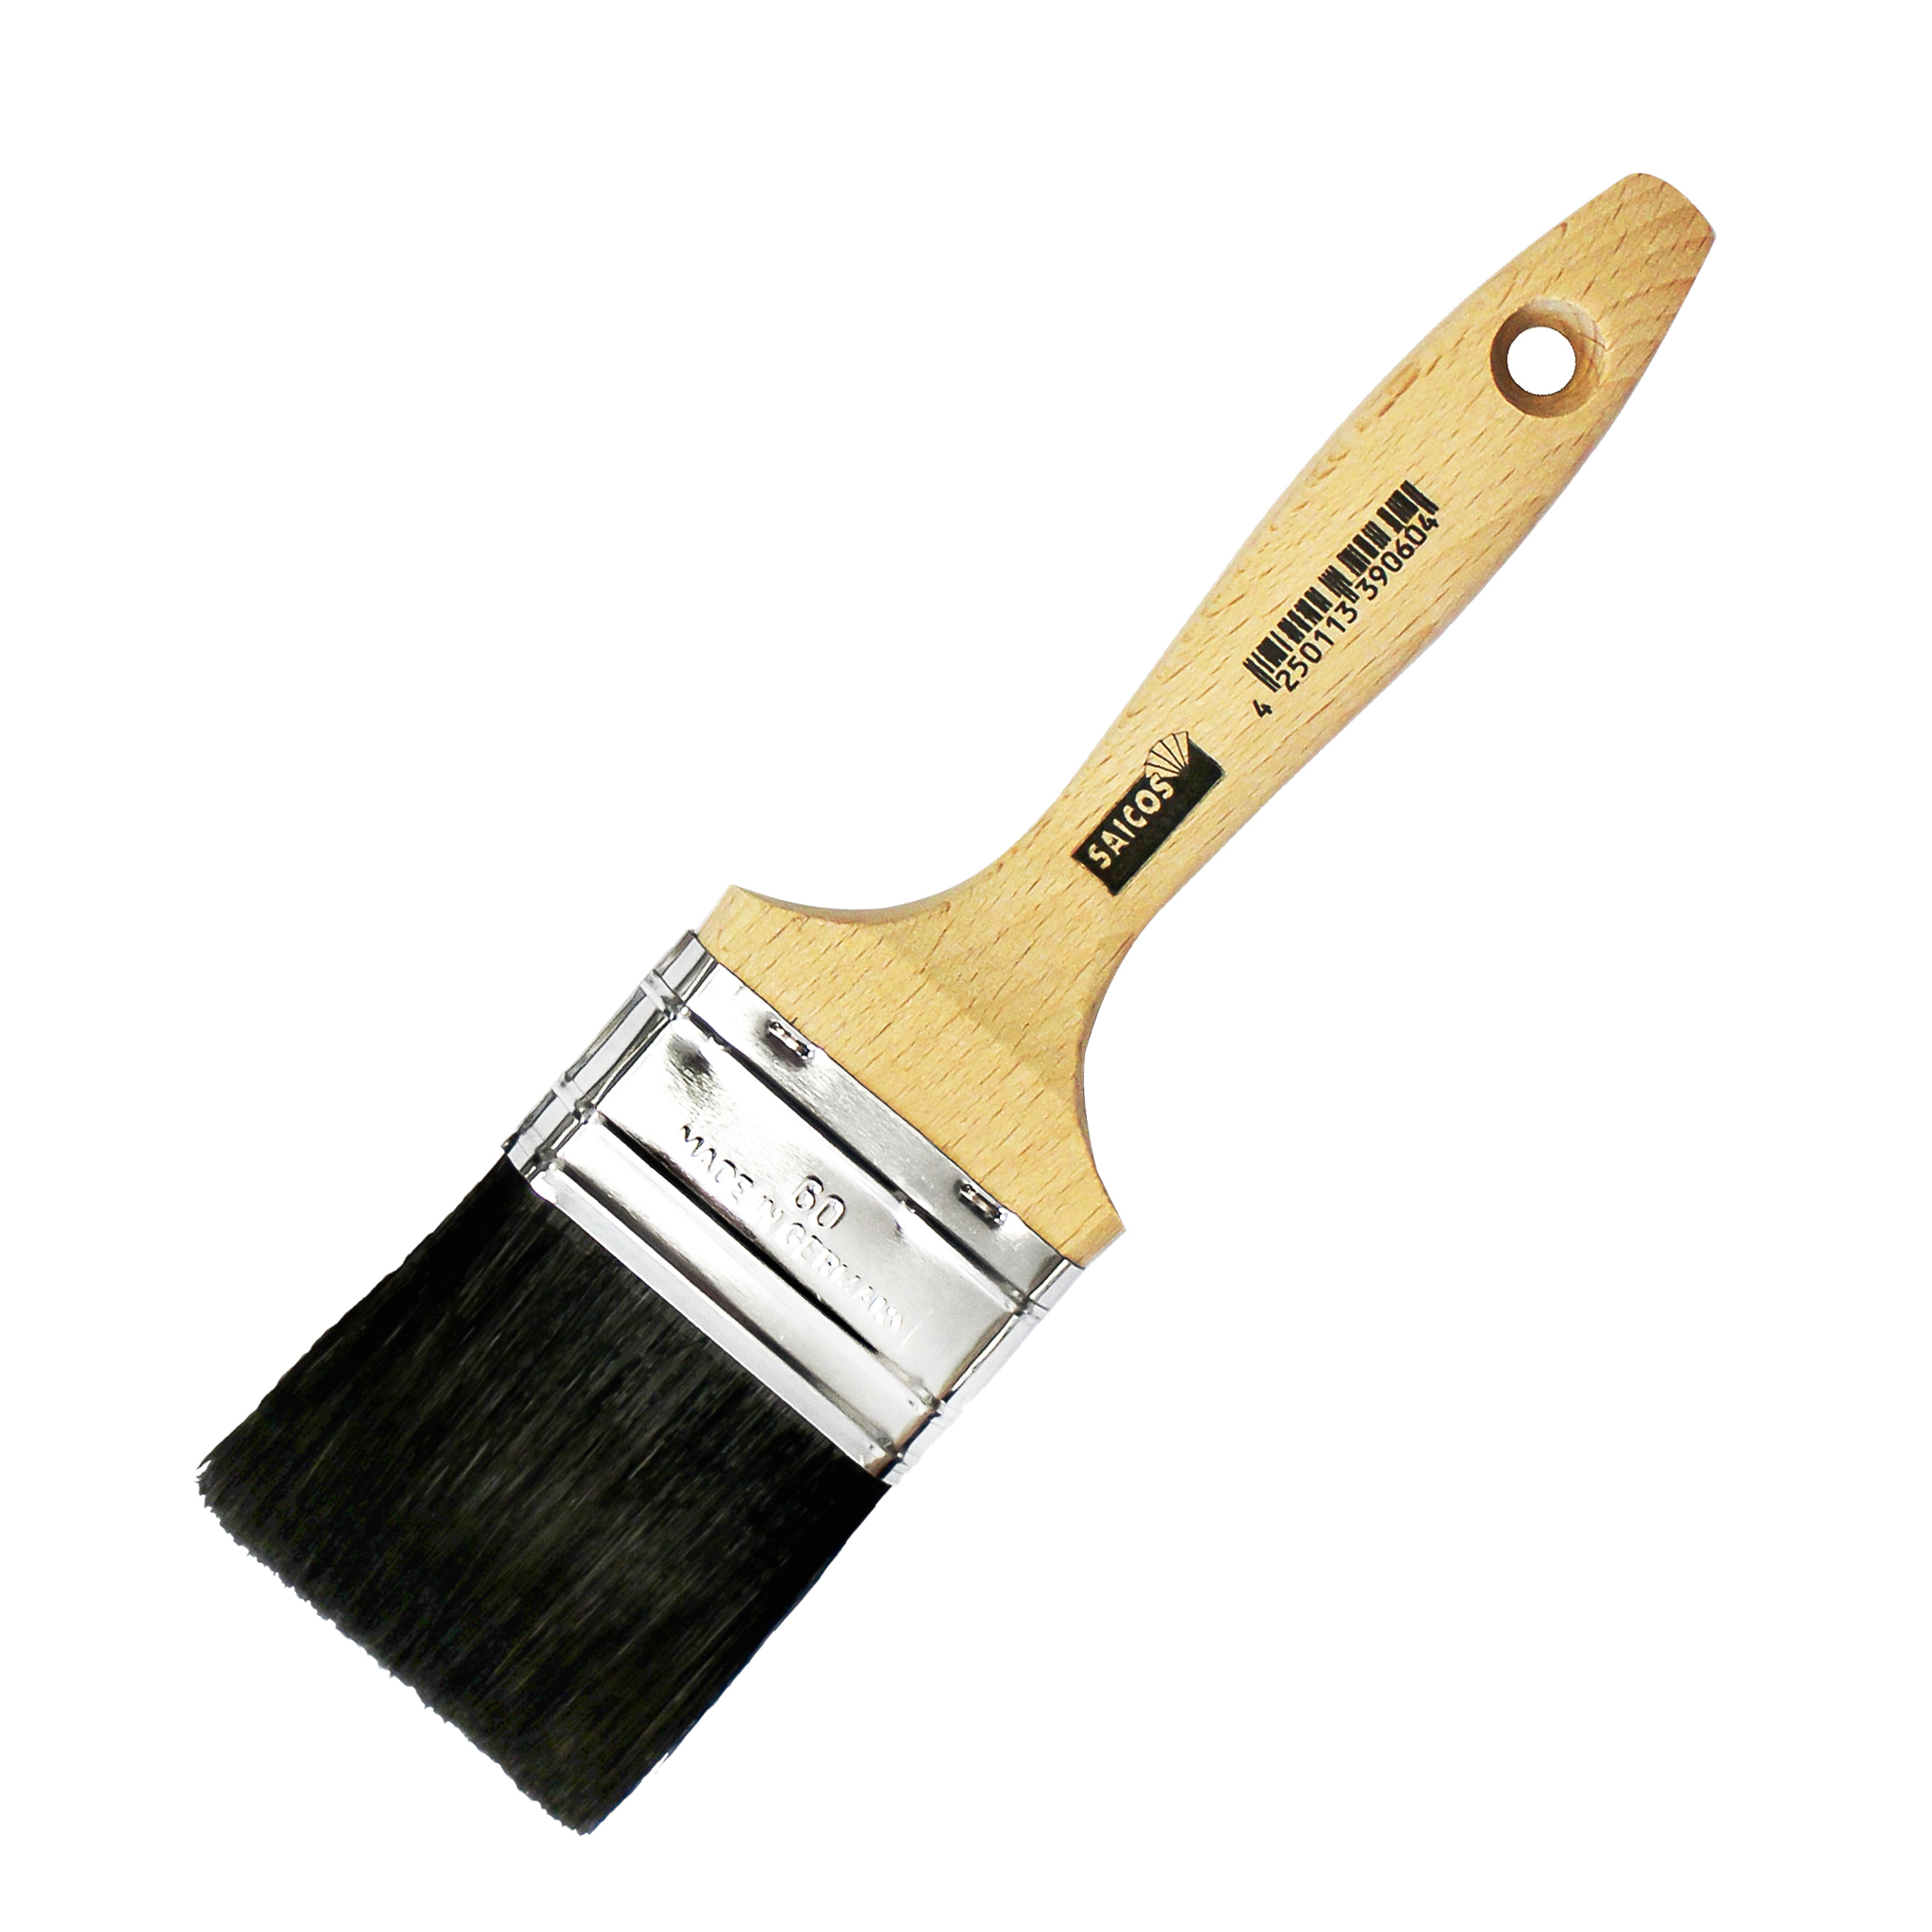 Saicos whitewash brush 60mm